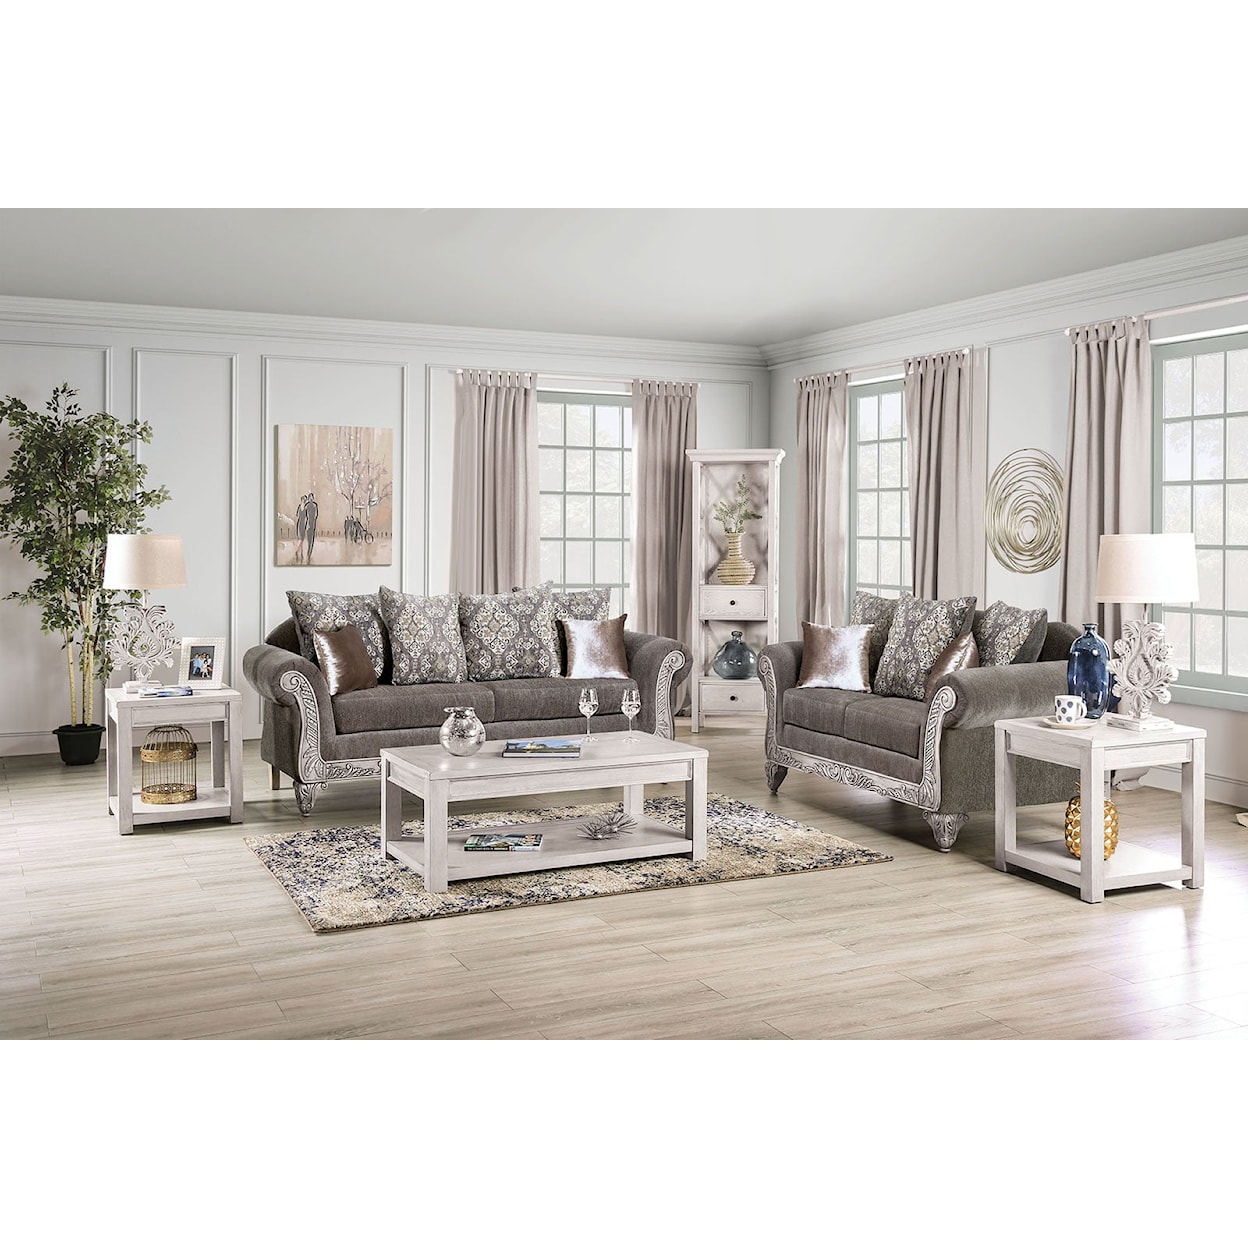 Furniture of America Velletri Living Room Set